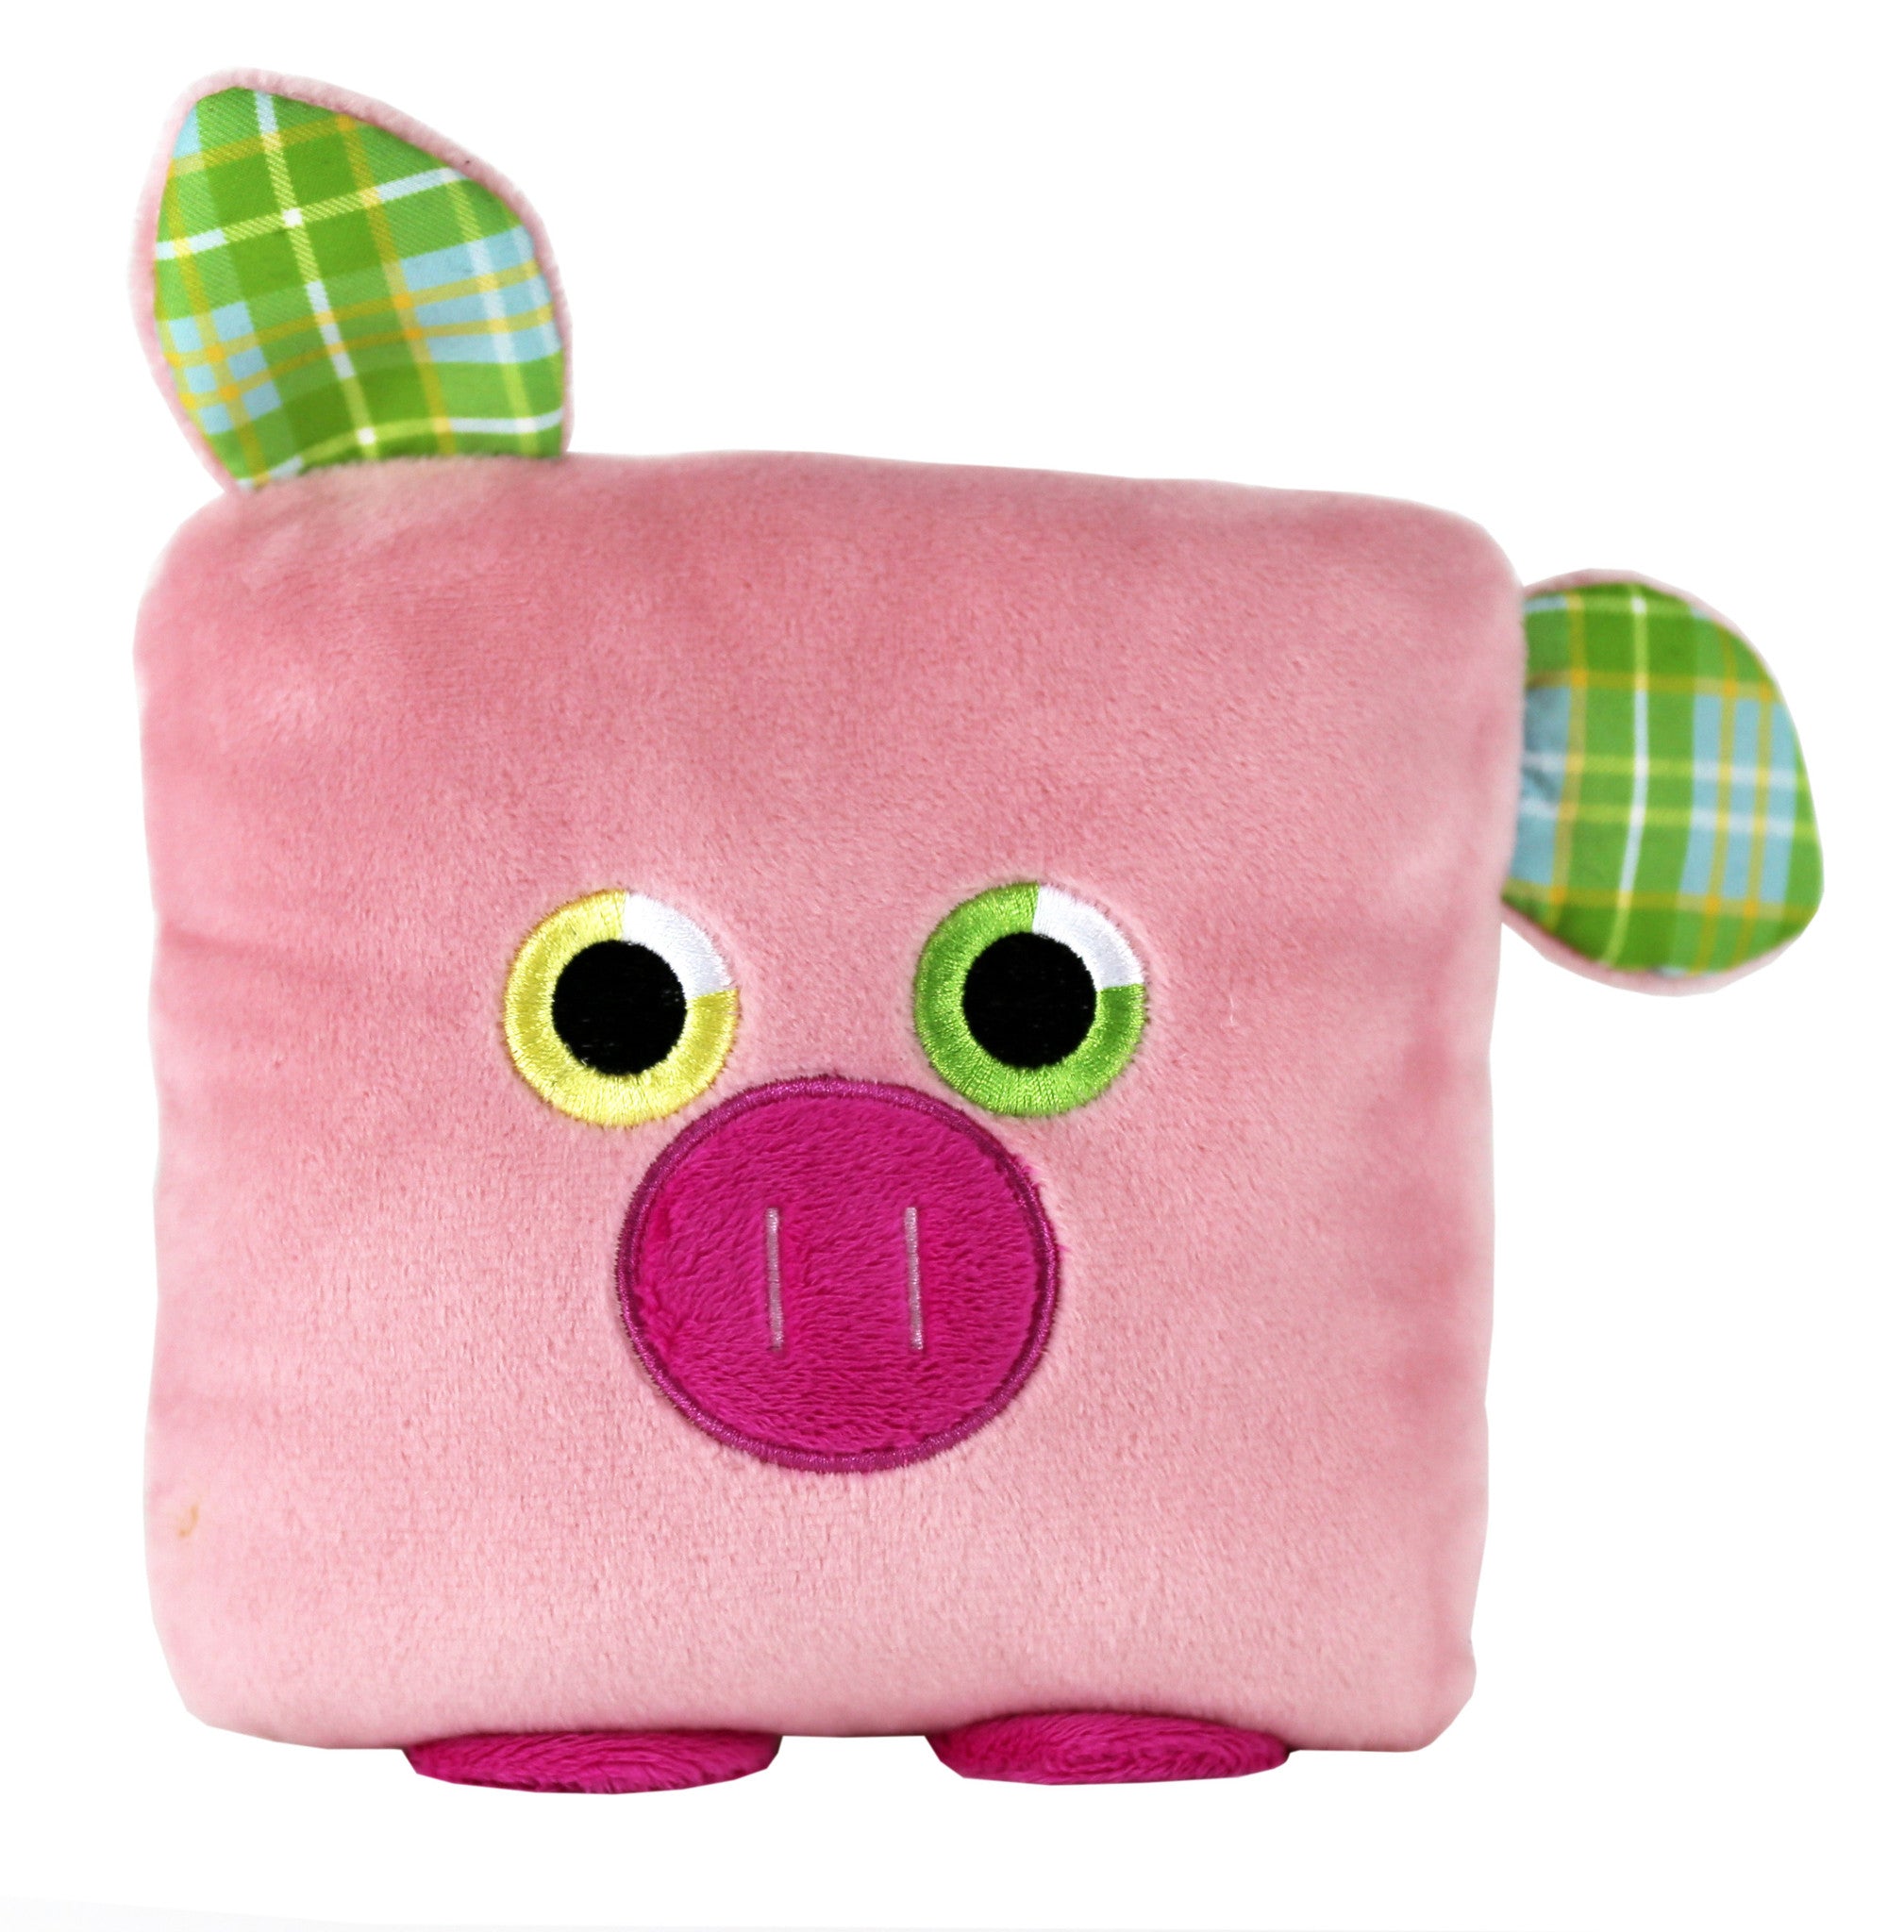 Plush toy pig stuffed animal with a useful back pocket